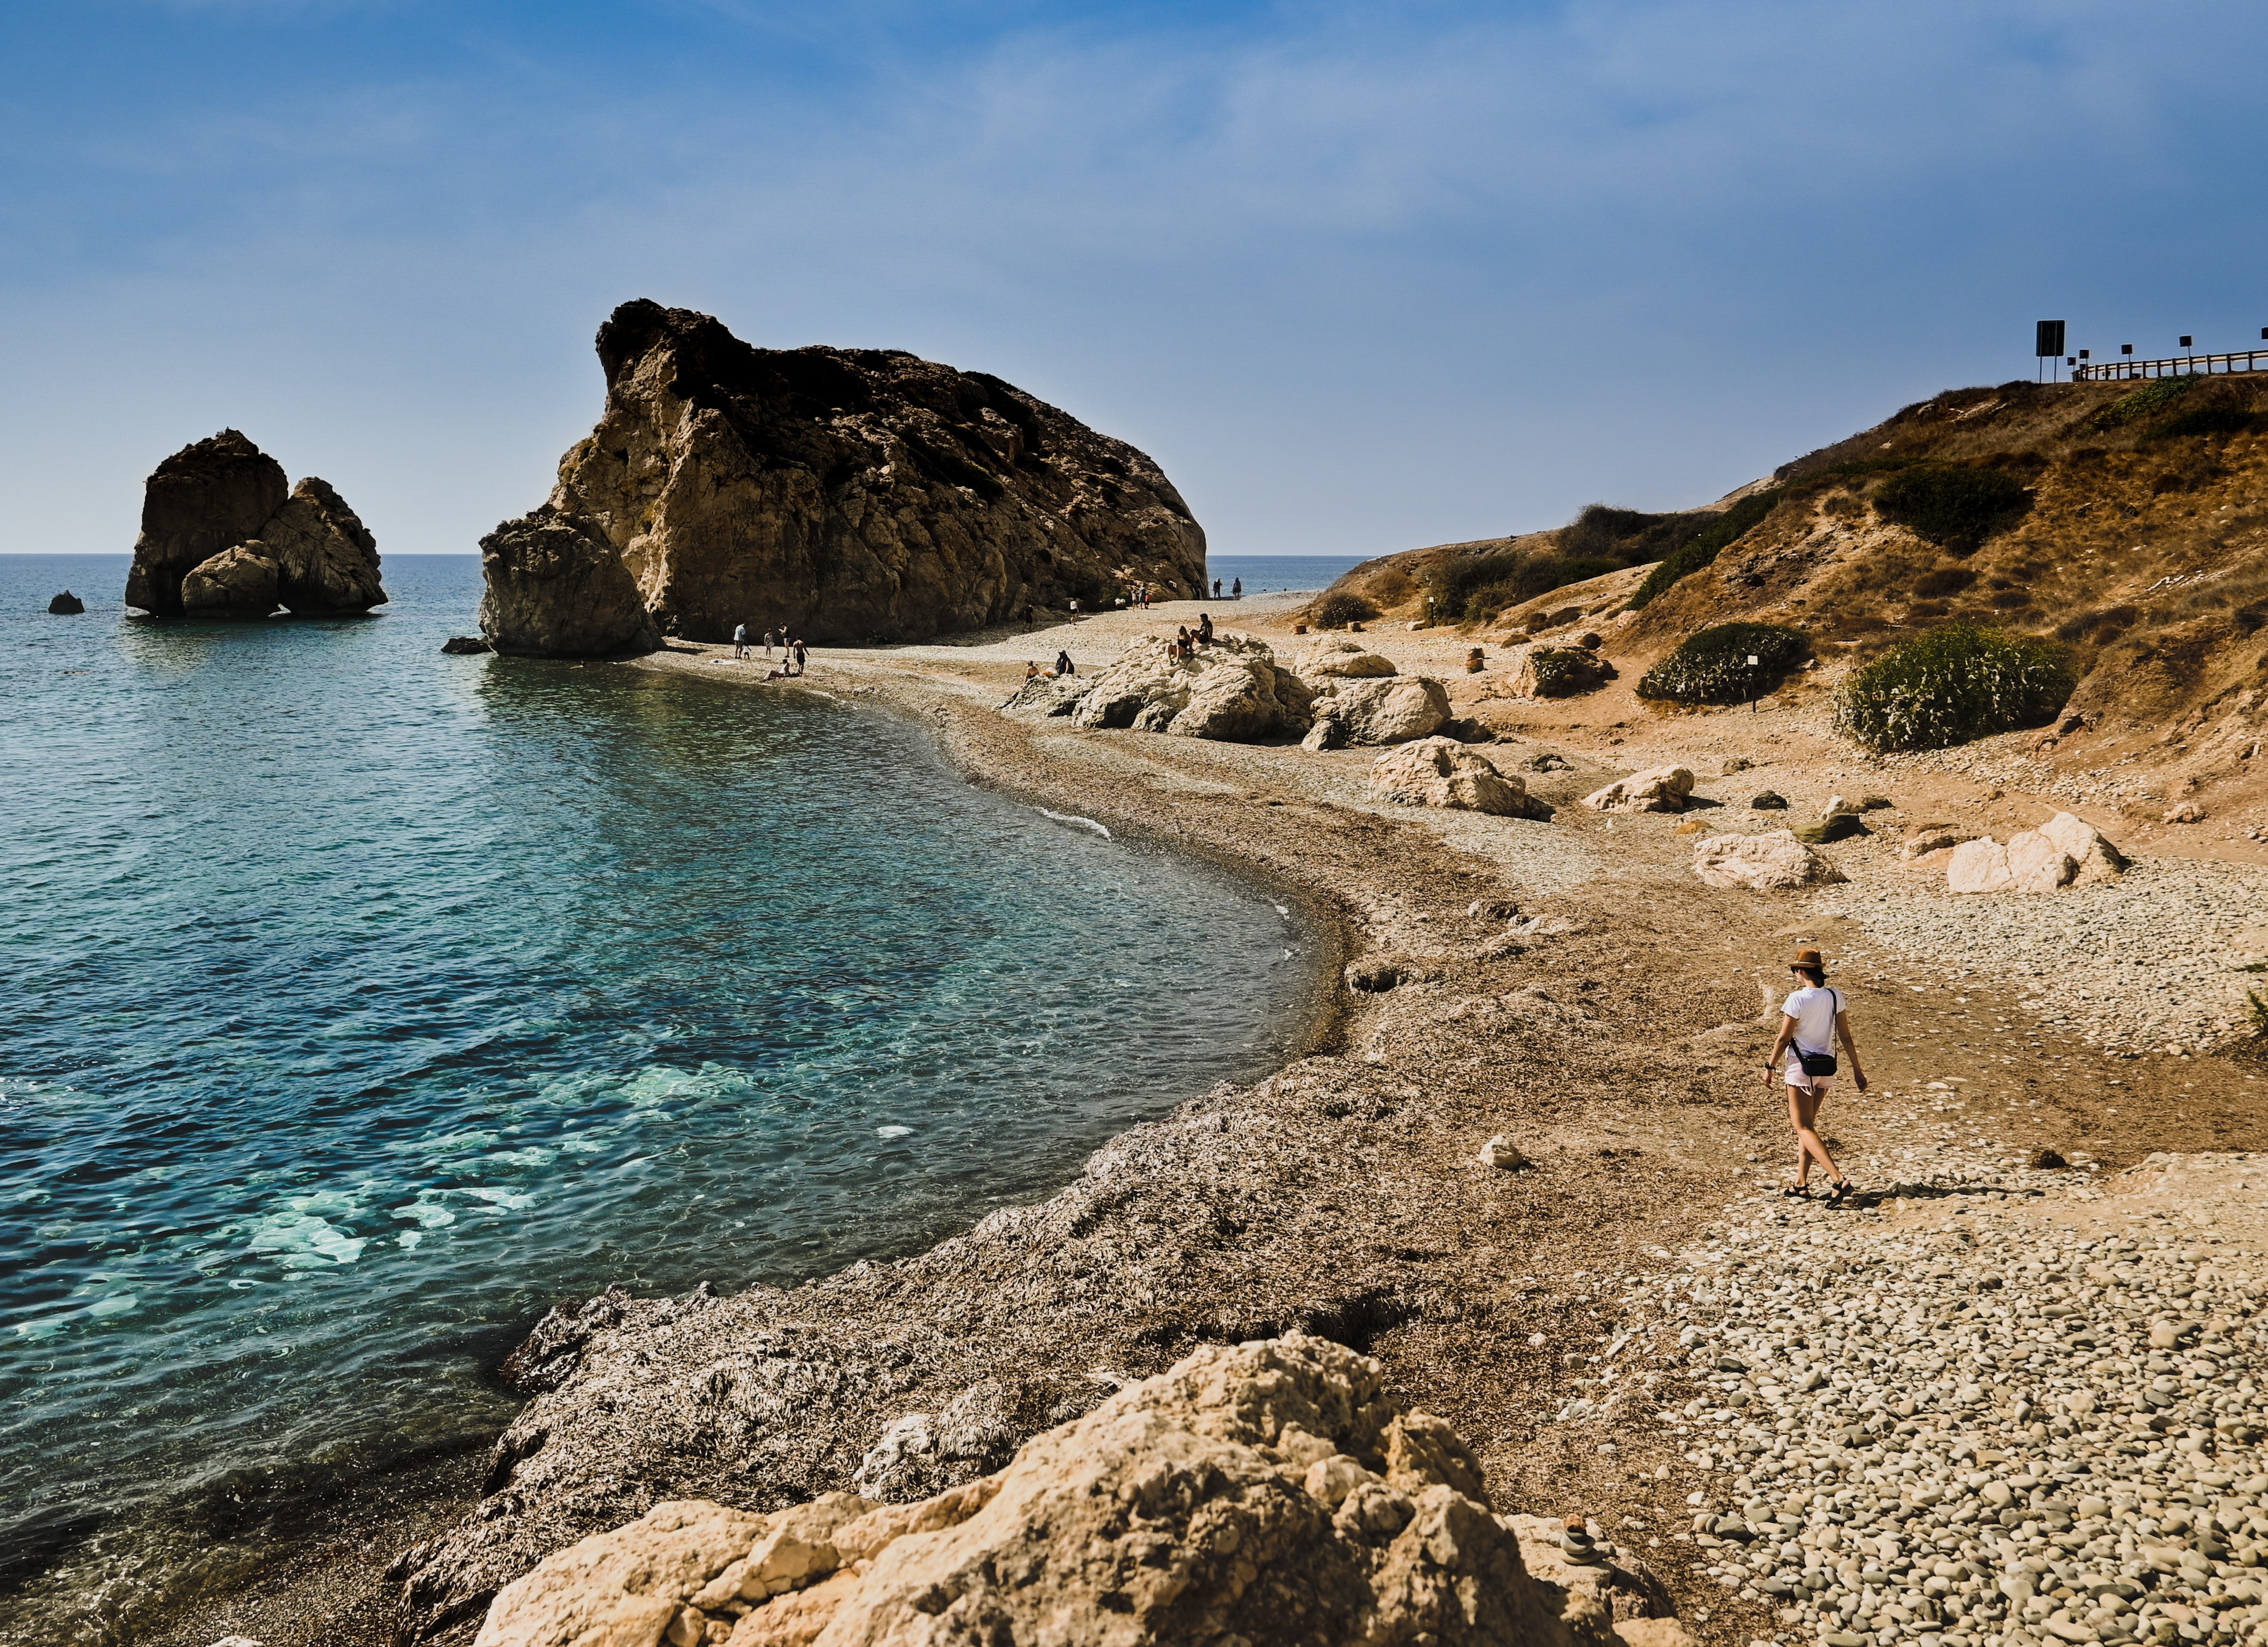 Paphos tourism board launches app promoting Aphrodite myth